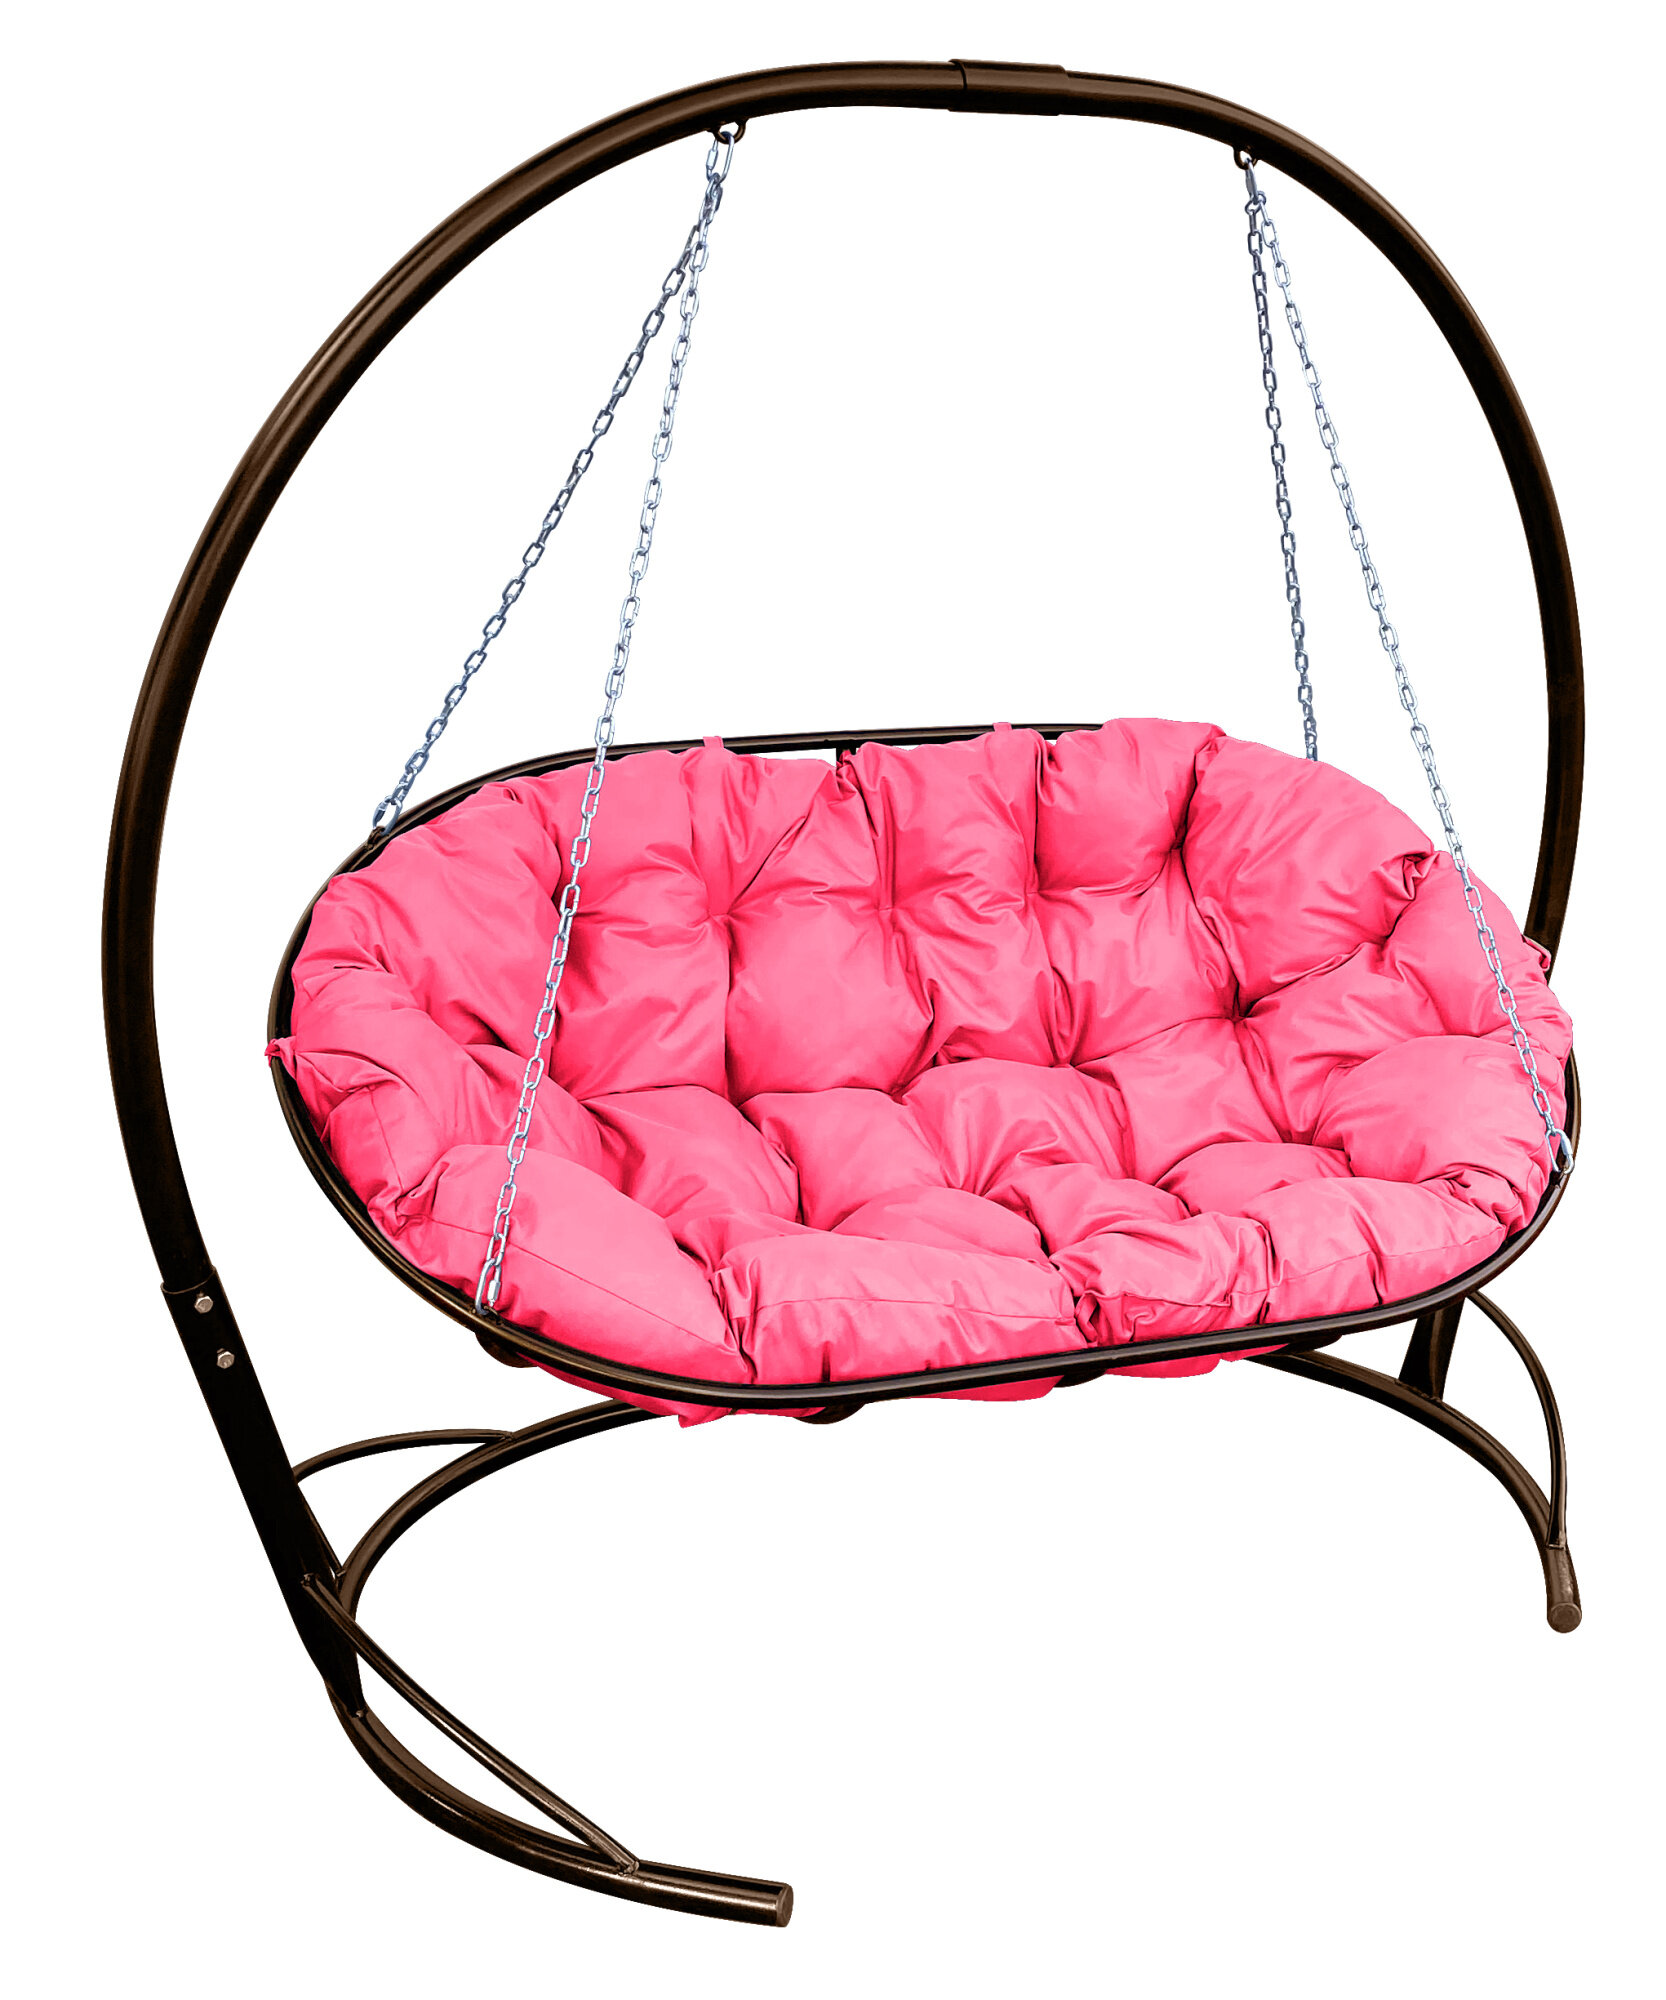 Диван m-group мамасан подвесной коричневый розовая подушка